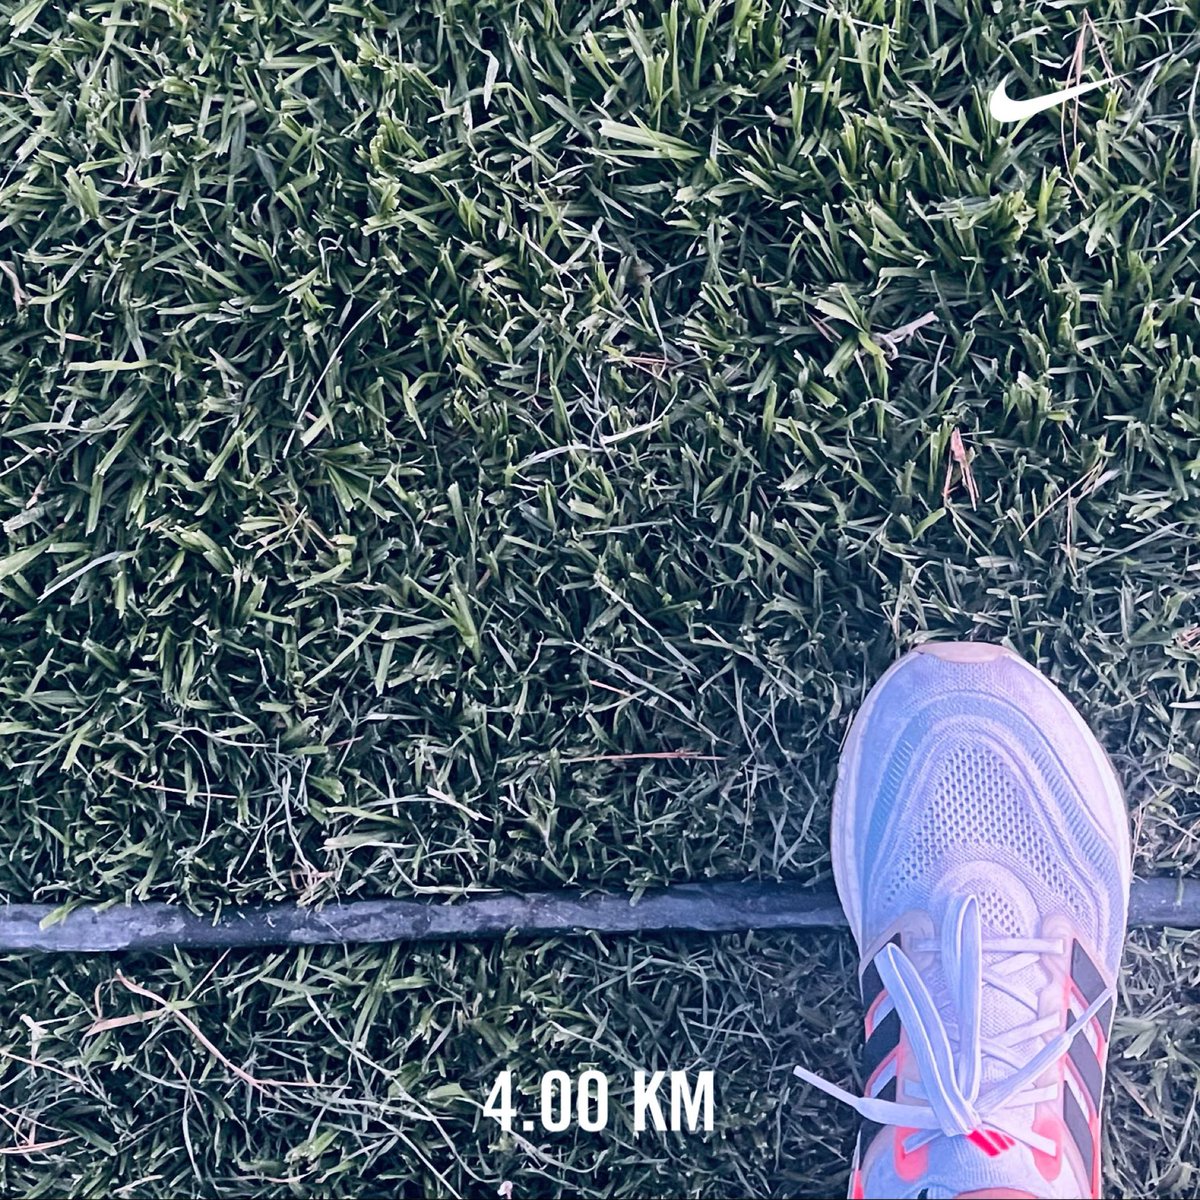 #EnLaCiudad vuelta de lunes
#Abril 
#April
#RecoveryRun
#Run
#Runner
#Runners
#Running
#JustRun
#KeepRunning
#Nike
#NikePlus
#NikeRunning
#NikeRunningDivision
#Adidas
#AdidasBoost
#AdidasUltraBoost
#AdidasUltraBoostLight
#ImpossibleIsNothing
#Ultraboost
#NikeRunClub
#NRC